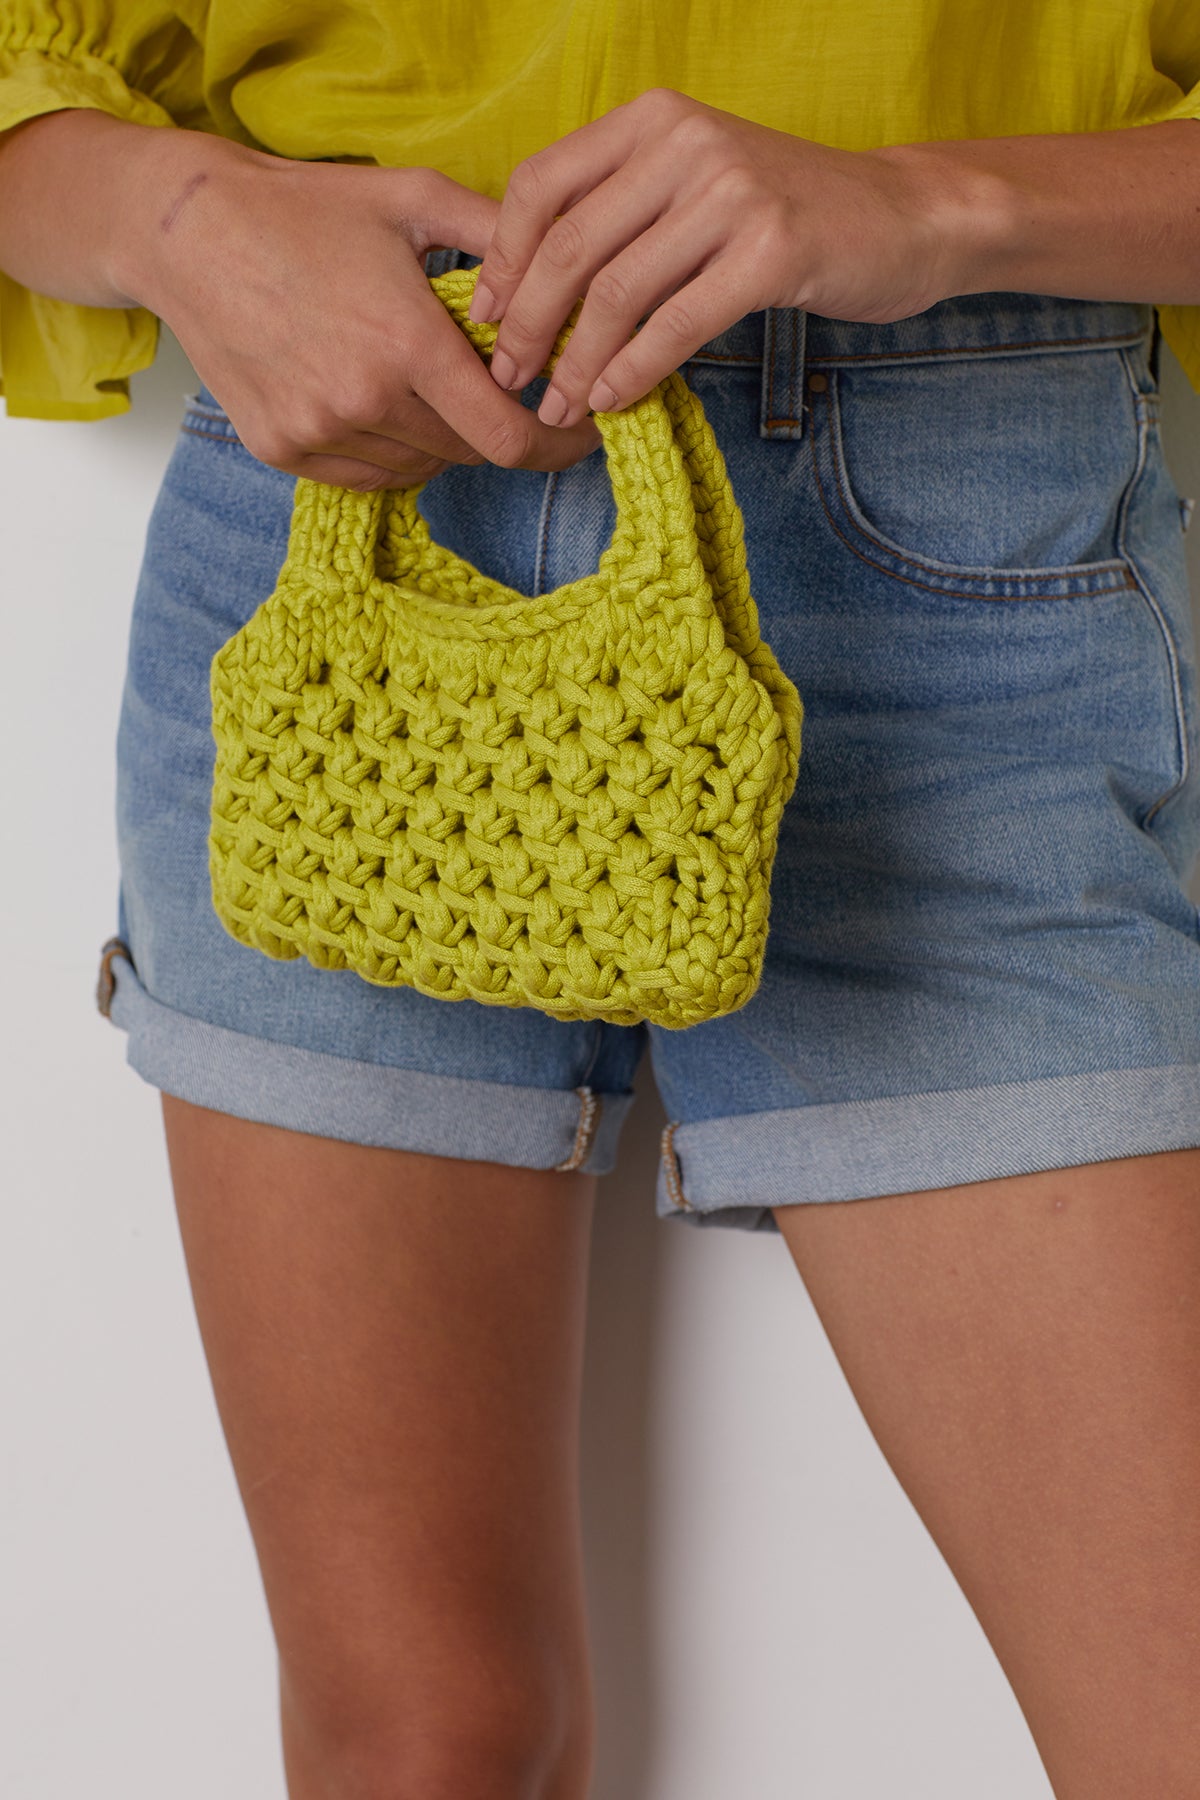 Bennie Crochet Bag in Lime with Natalie Denim  Shorts-24427948245185